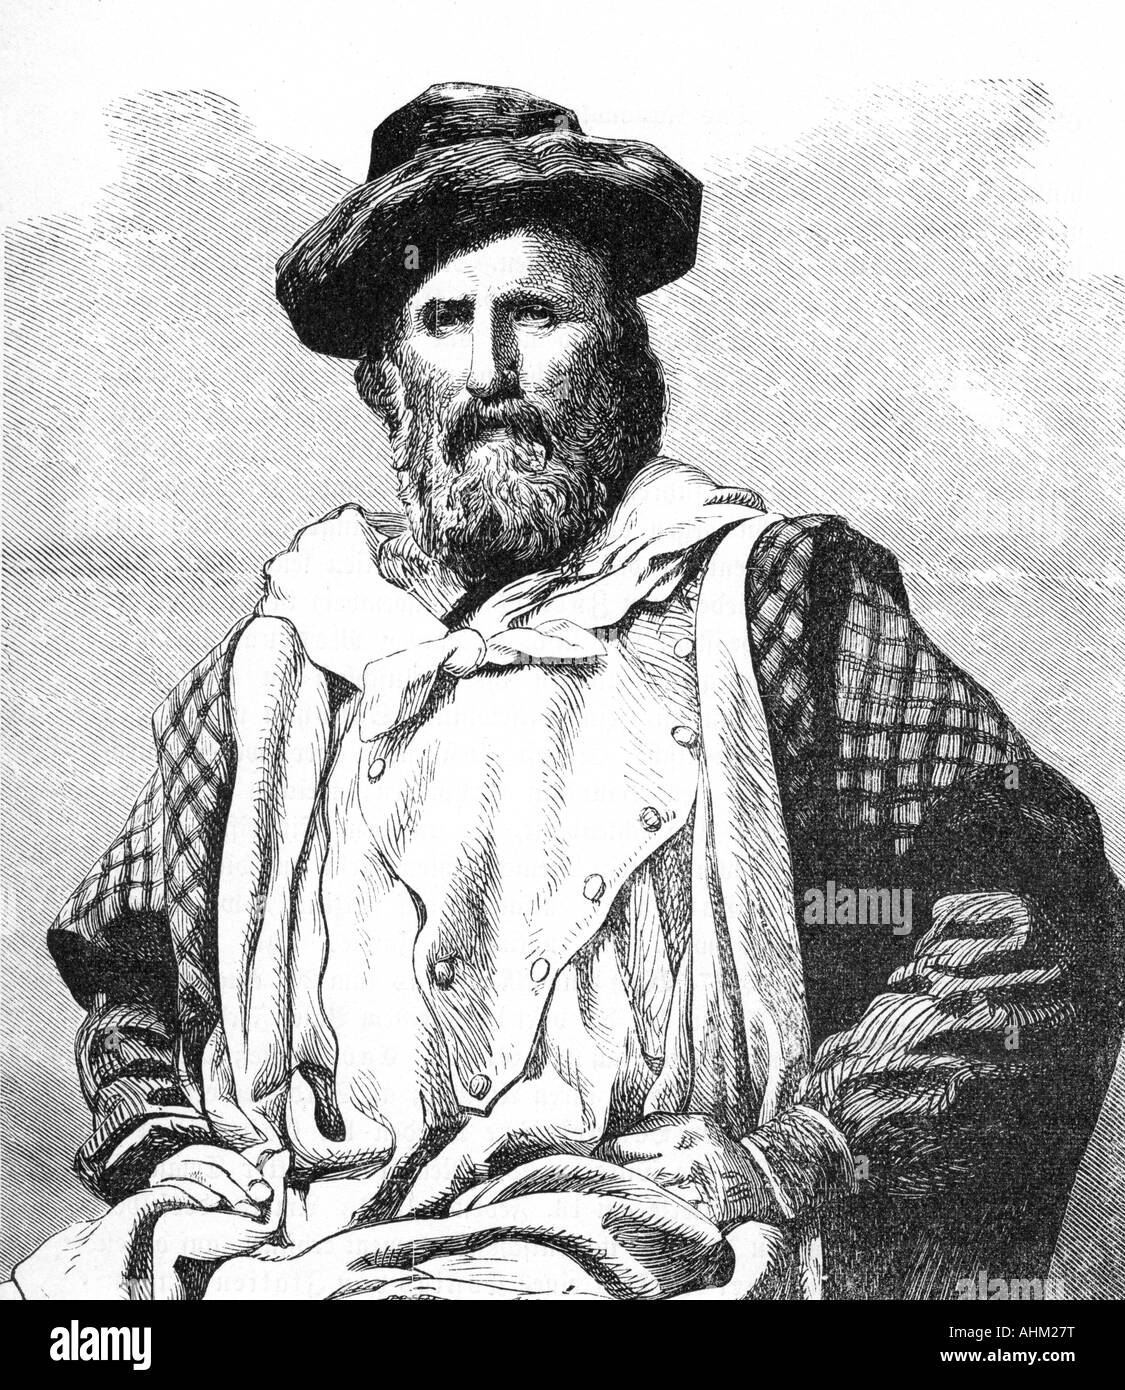 Garibaldi, Giuseppe, 4.7.1807 - 2.6.1882, Italian freedomfighter, half length, after engraving, 19th century, Stock Photo